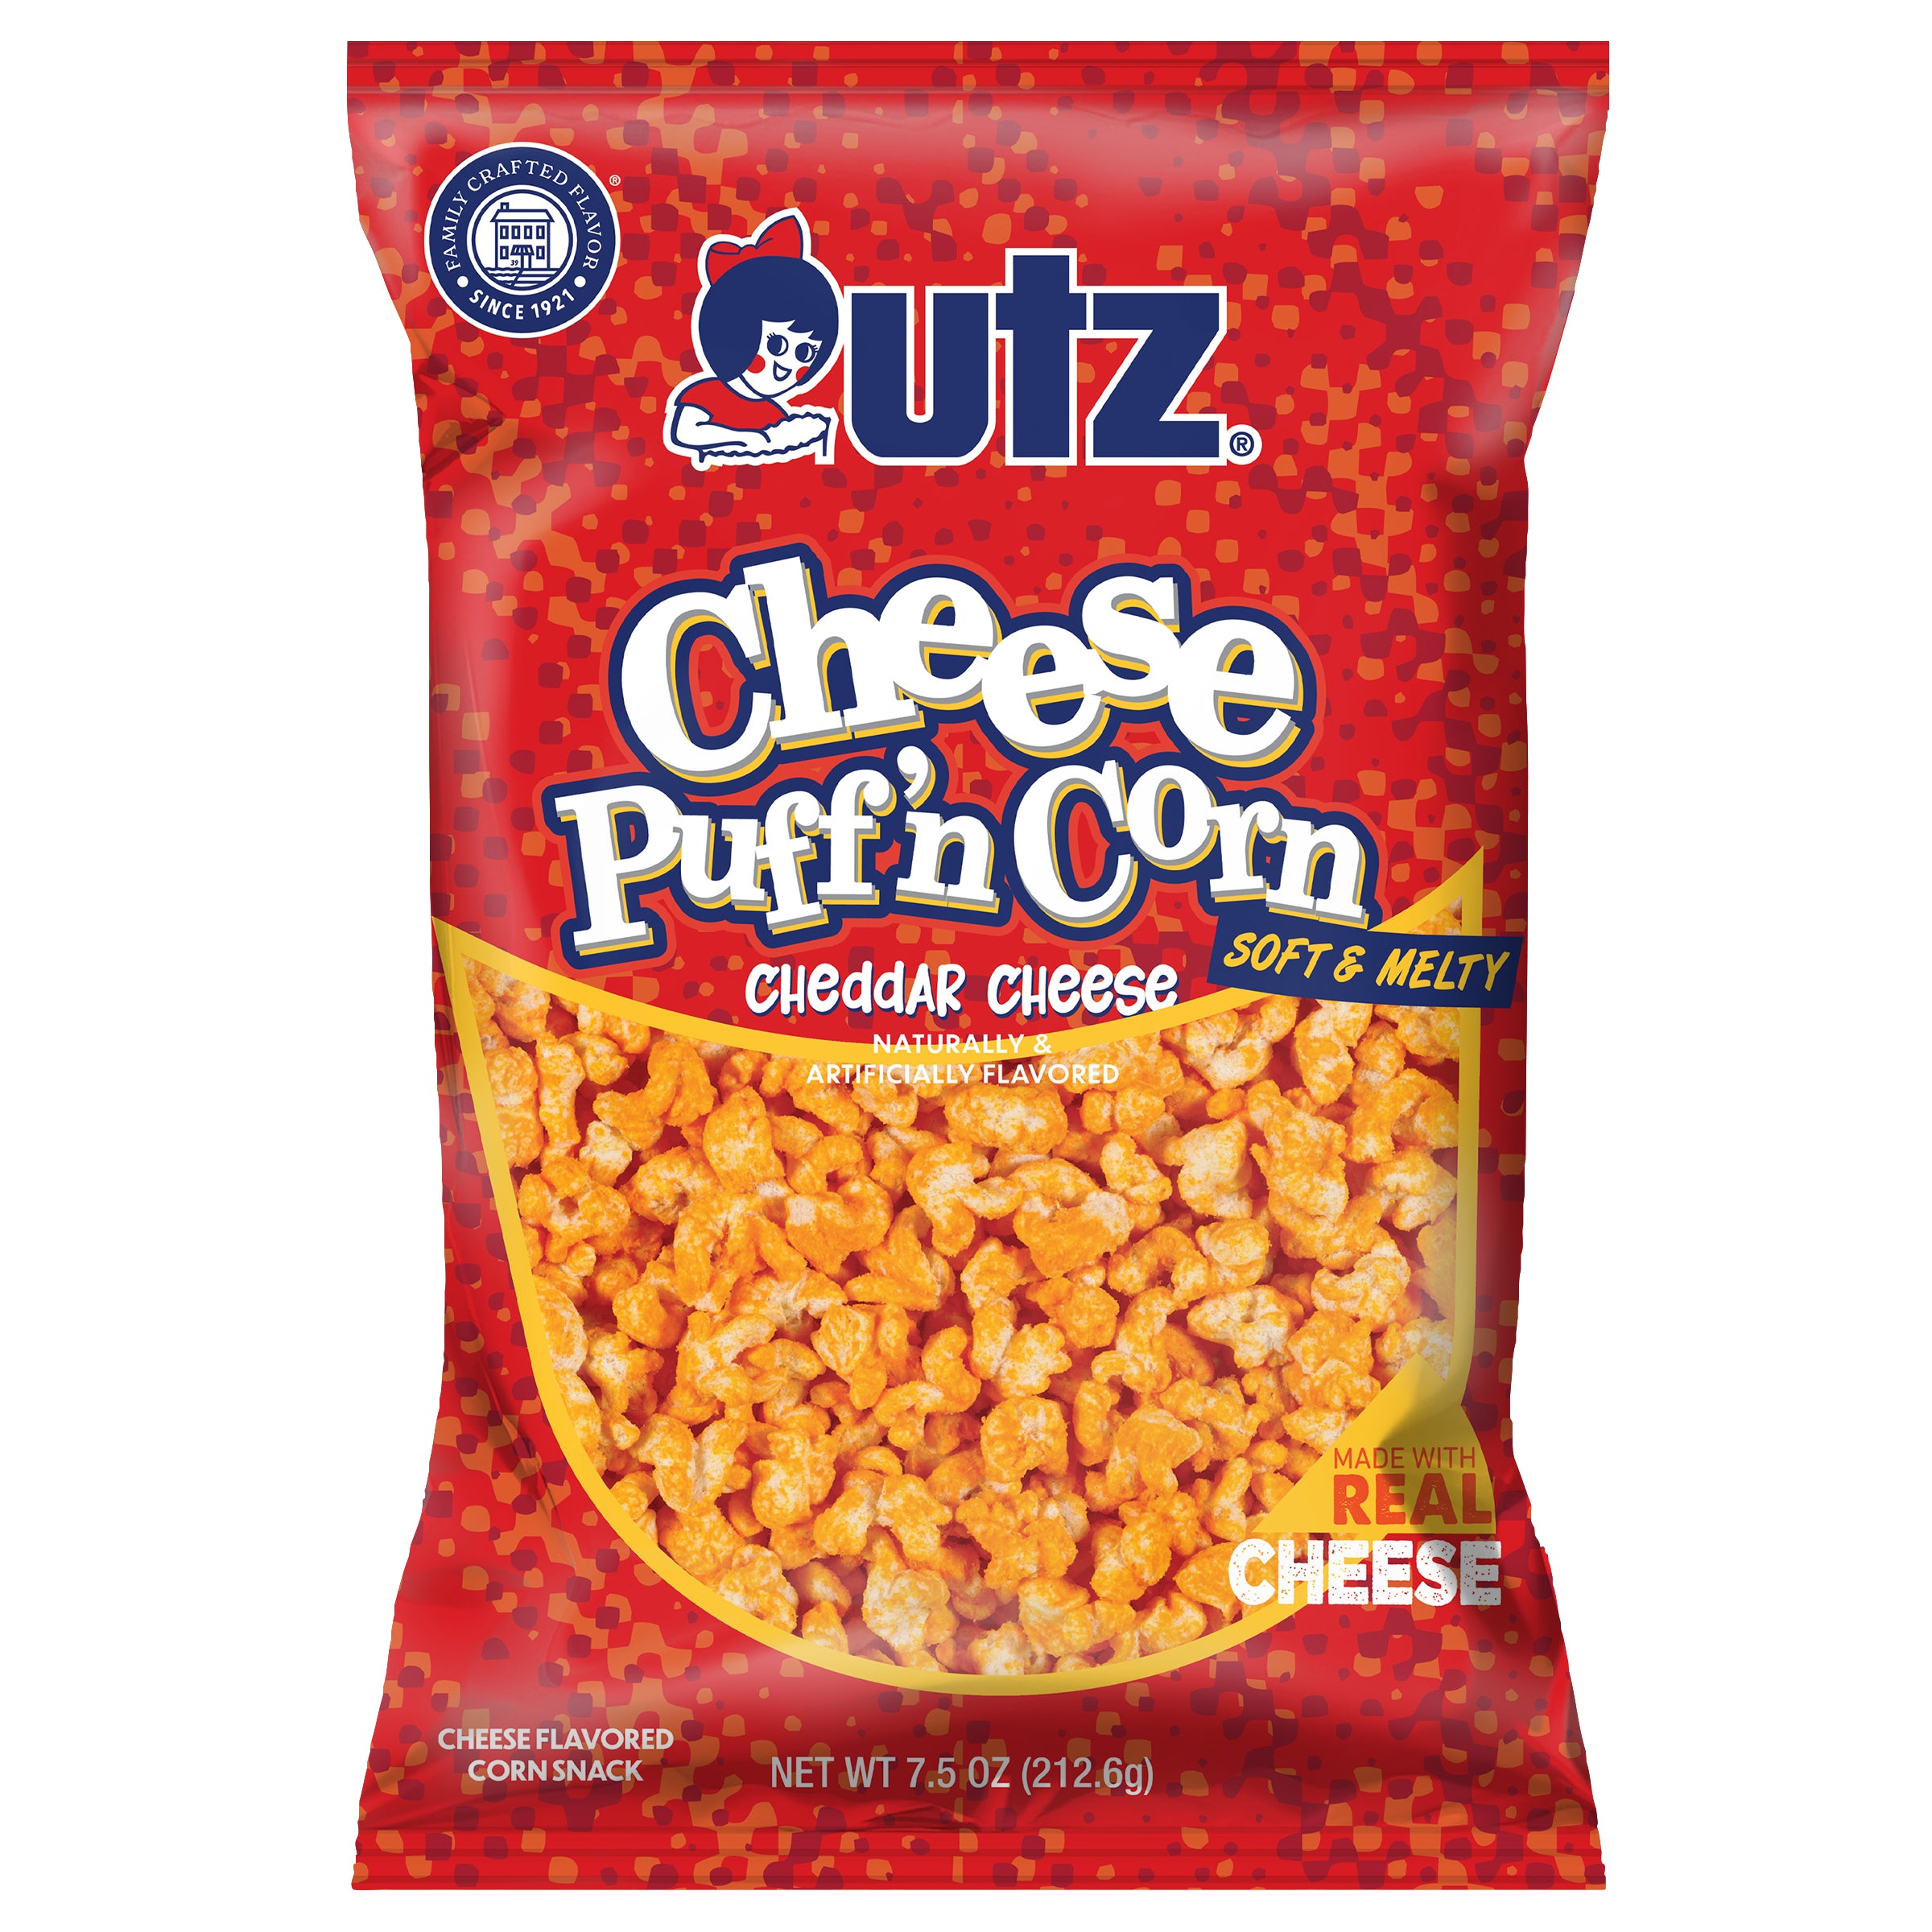 Herr's Puff'n Corn Original Hulless Puffed Corn, 3 3/4 oz - The Fresh Grocer